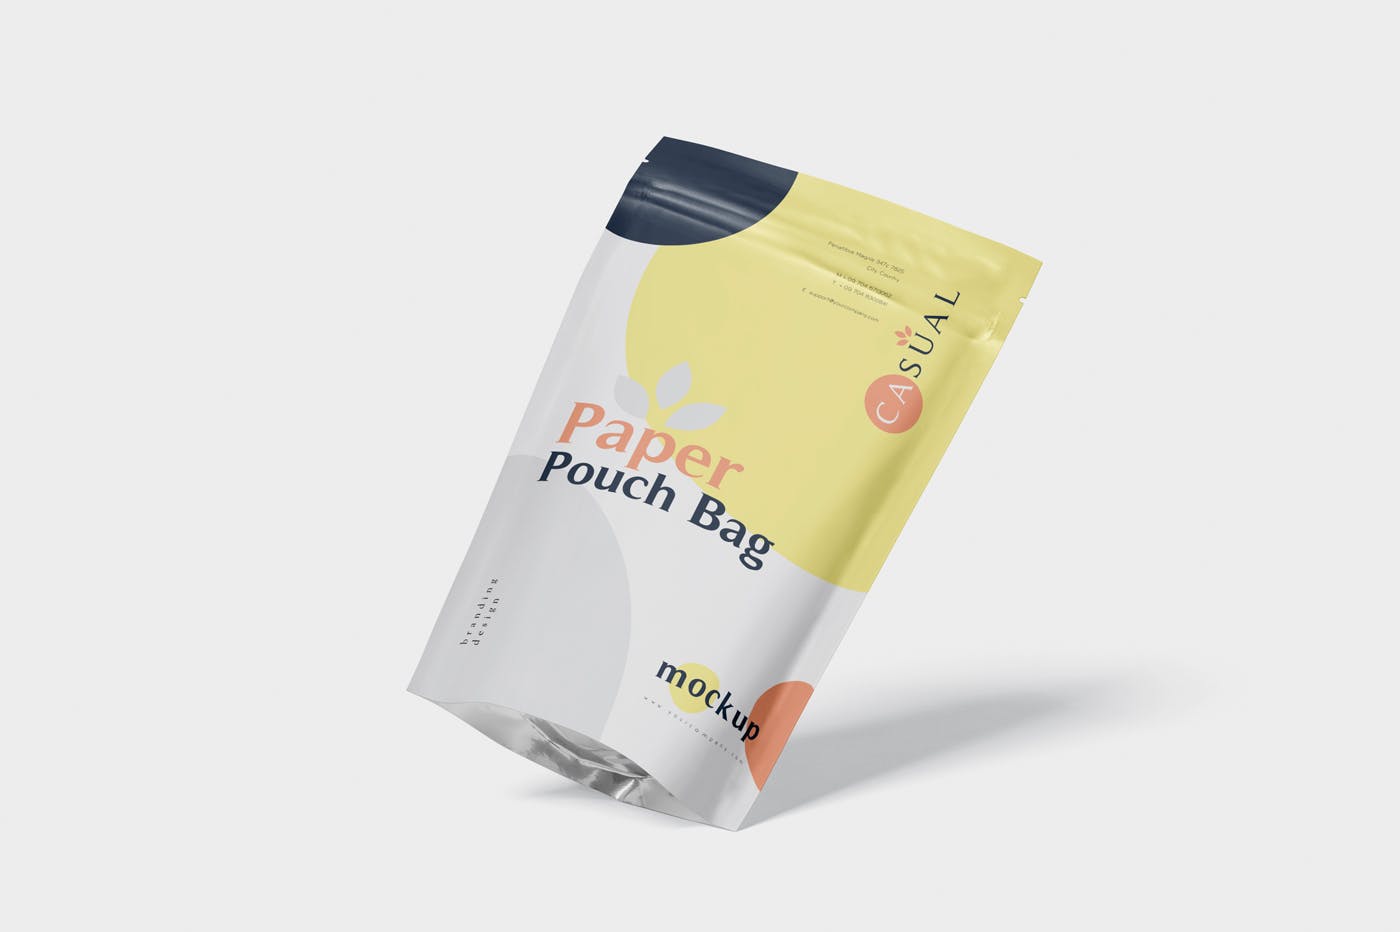 食品自封袋包装设计效果图素材库精选 Paper Pouch Bag Mockup – Large Size插图(4)